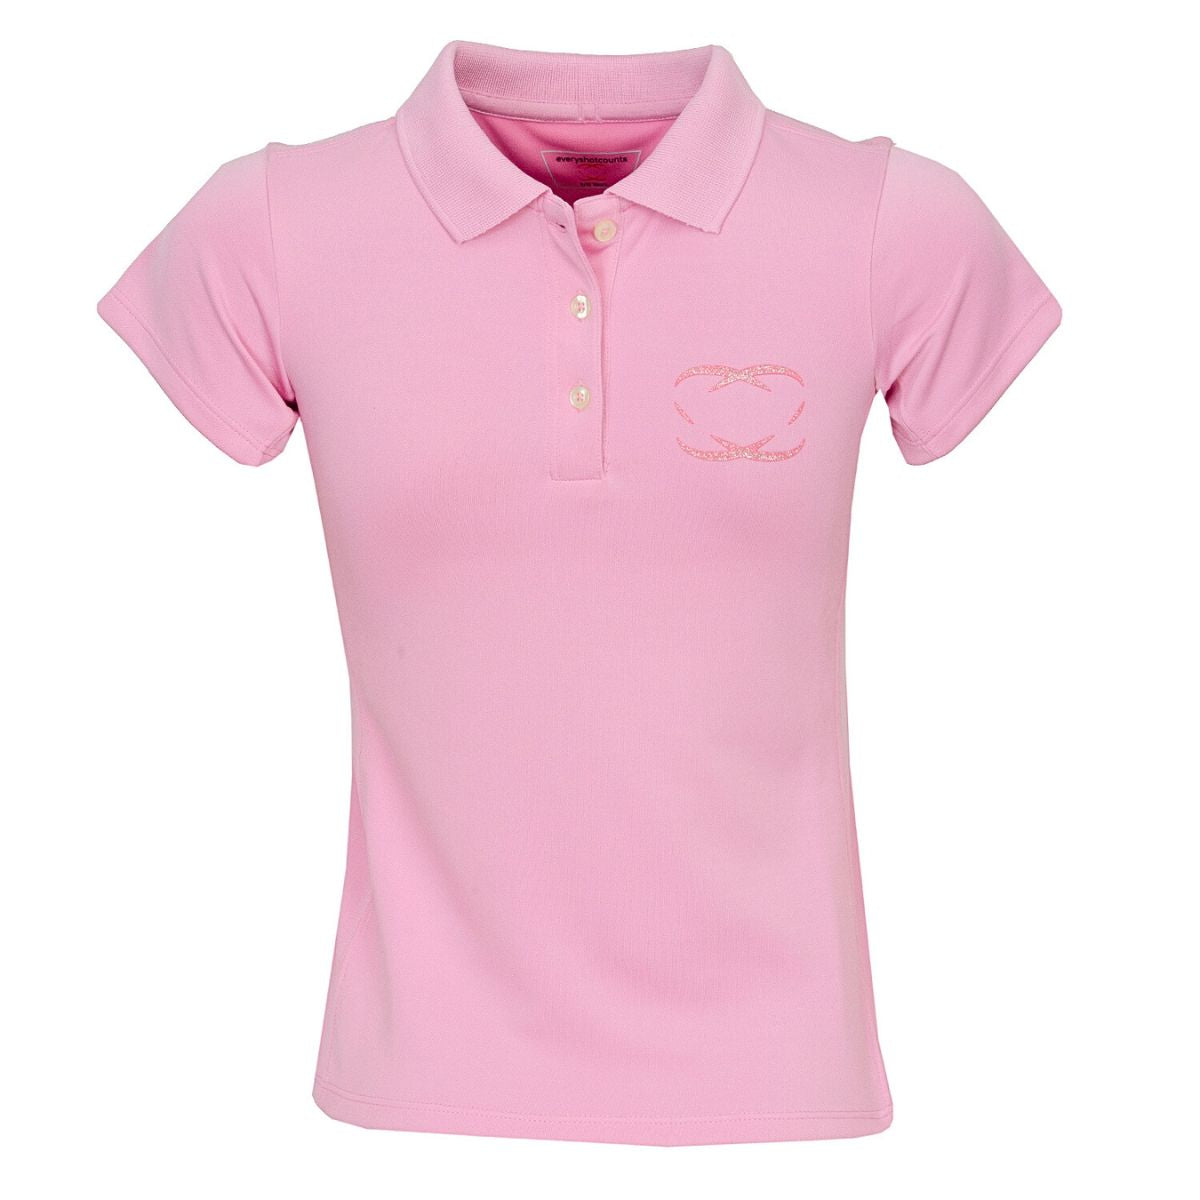 Girls golf clothes – everyshotcounts